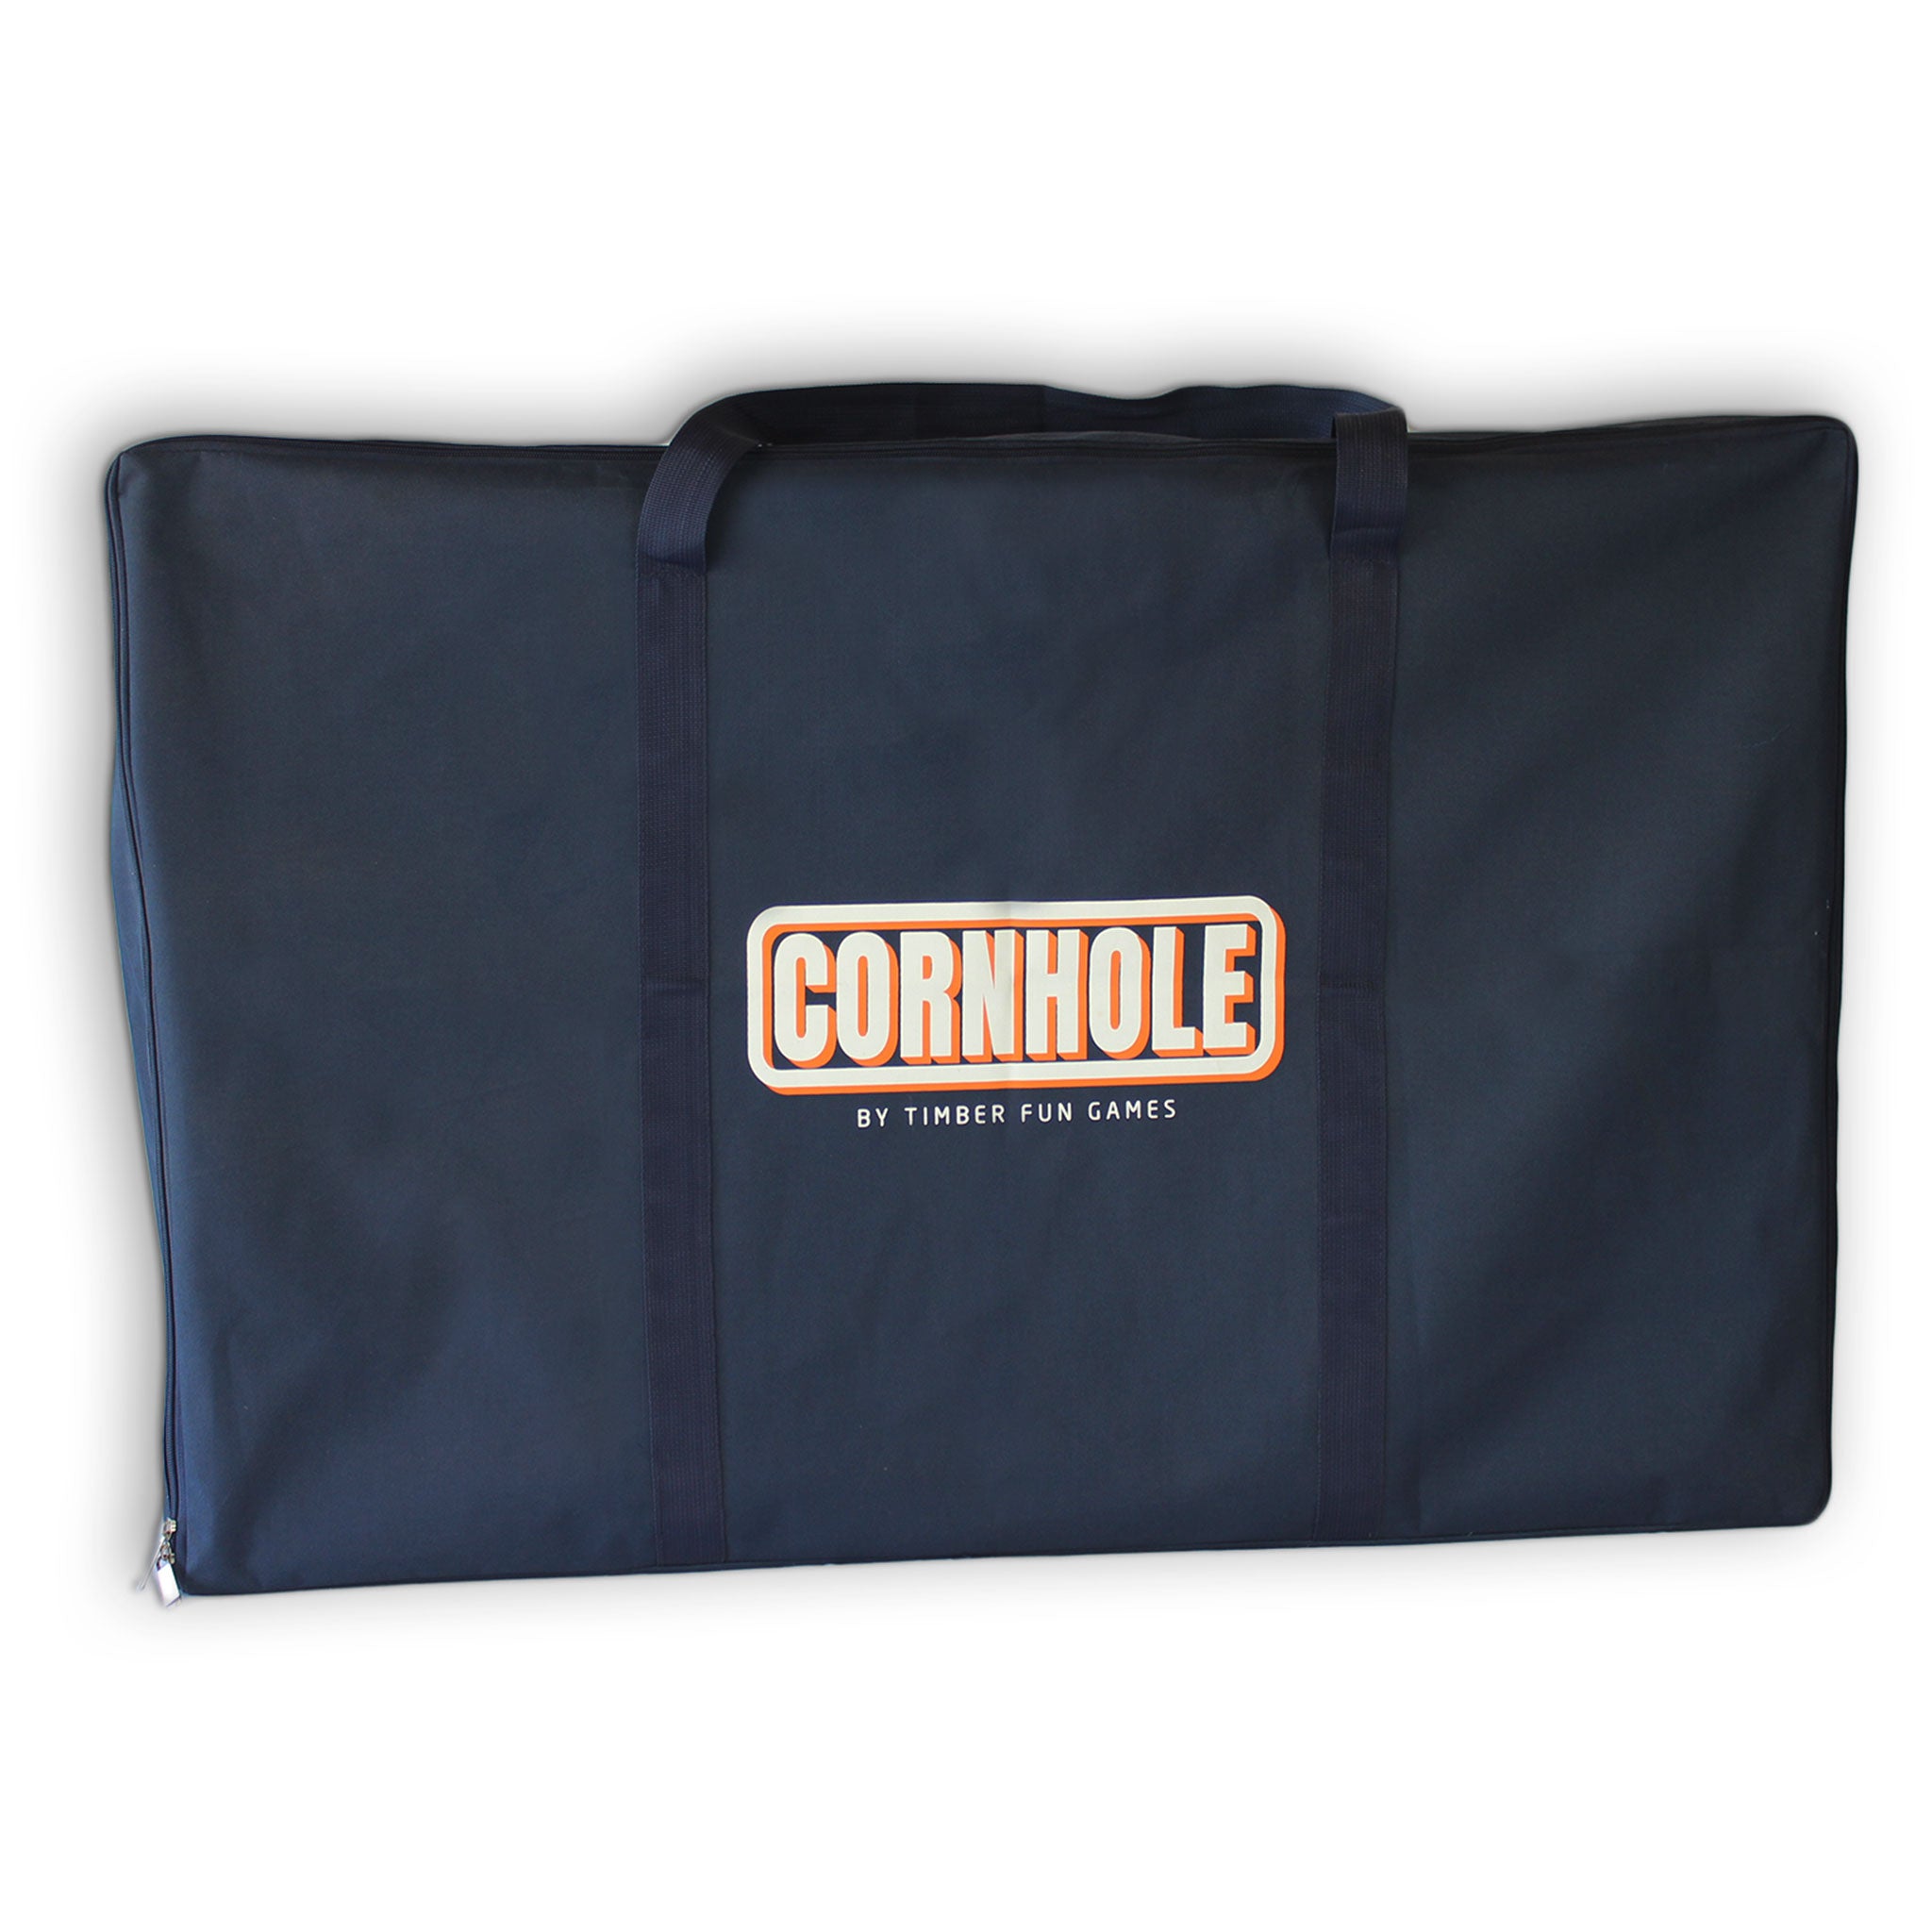 Cornhole Bag Toss American Game Wooden Garden Lawn Game